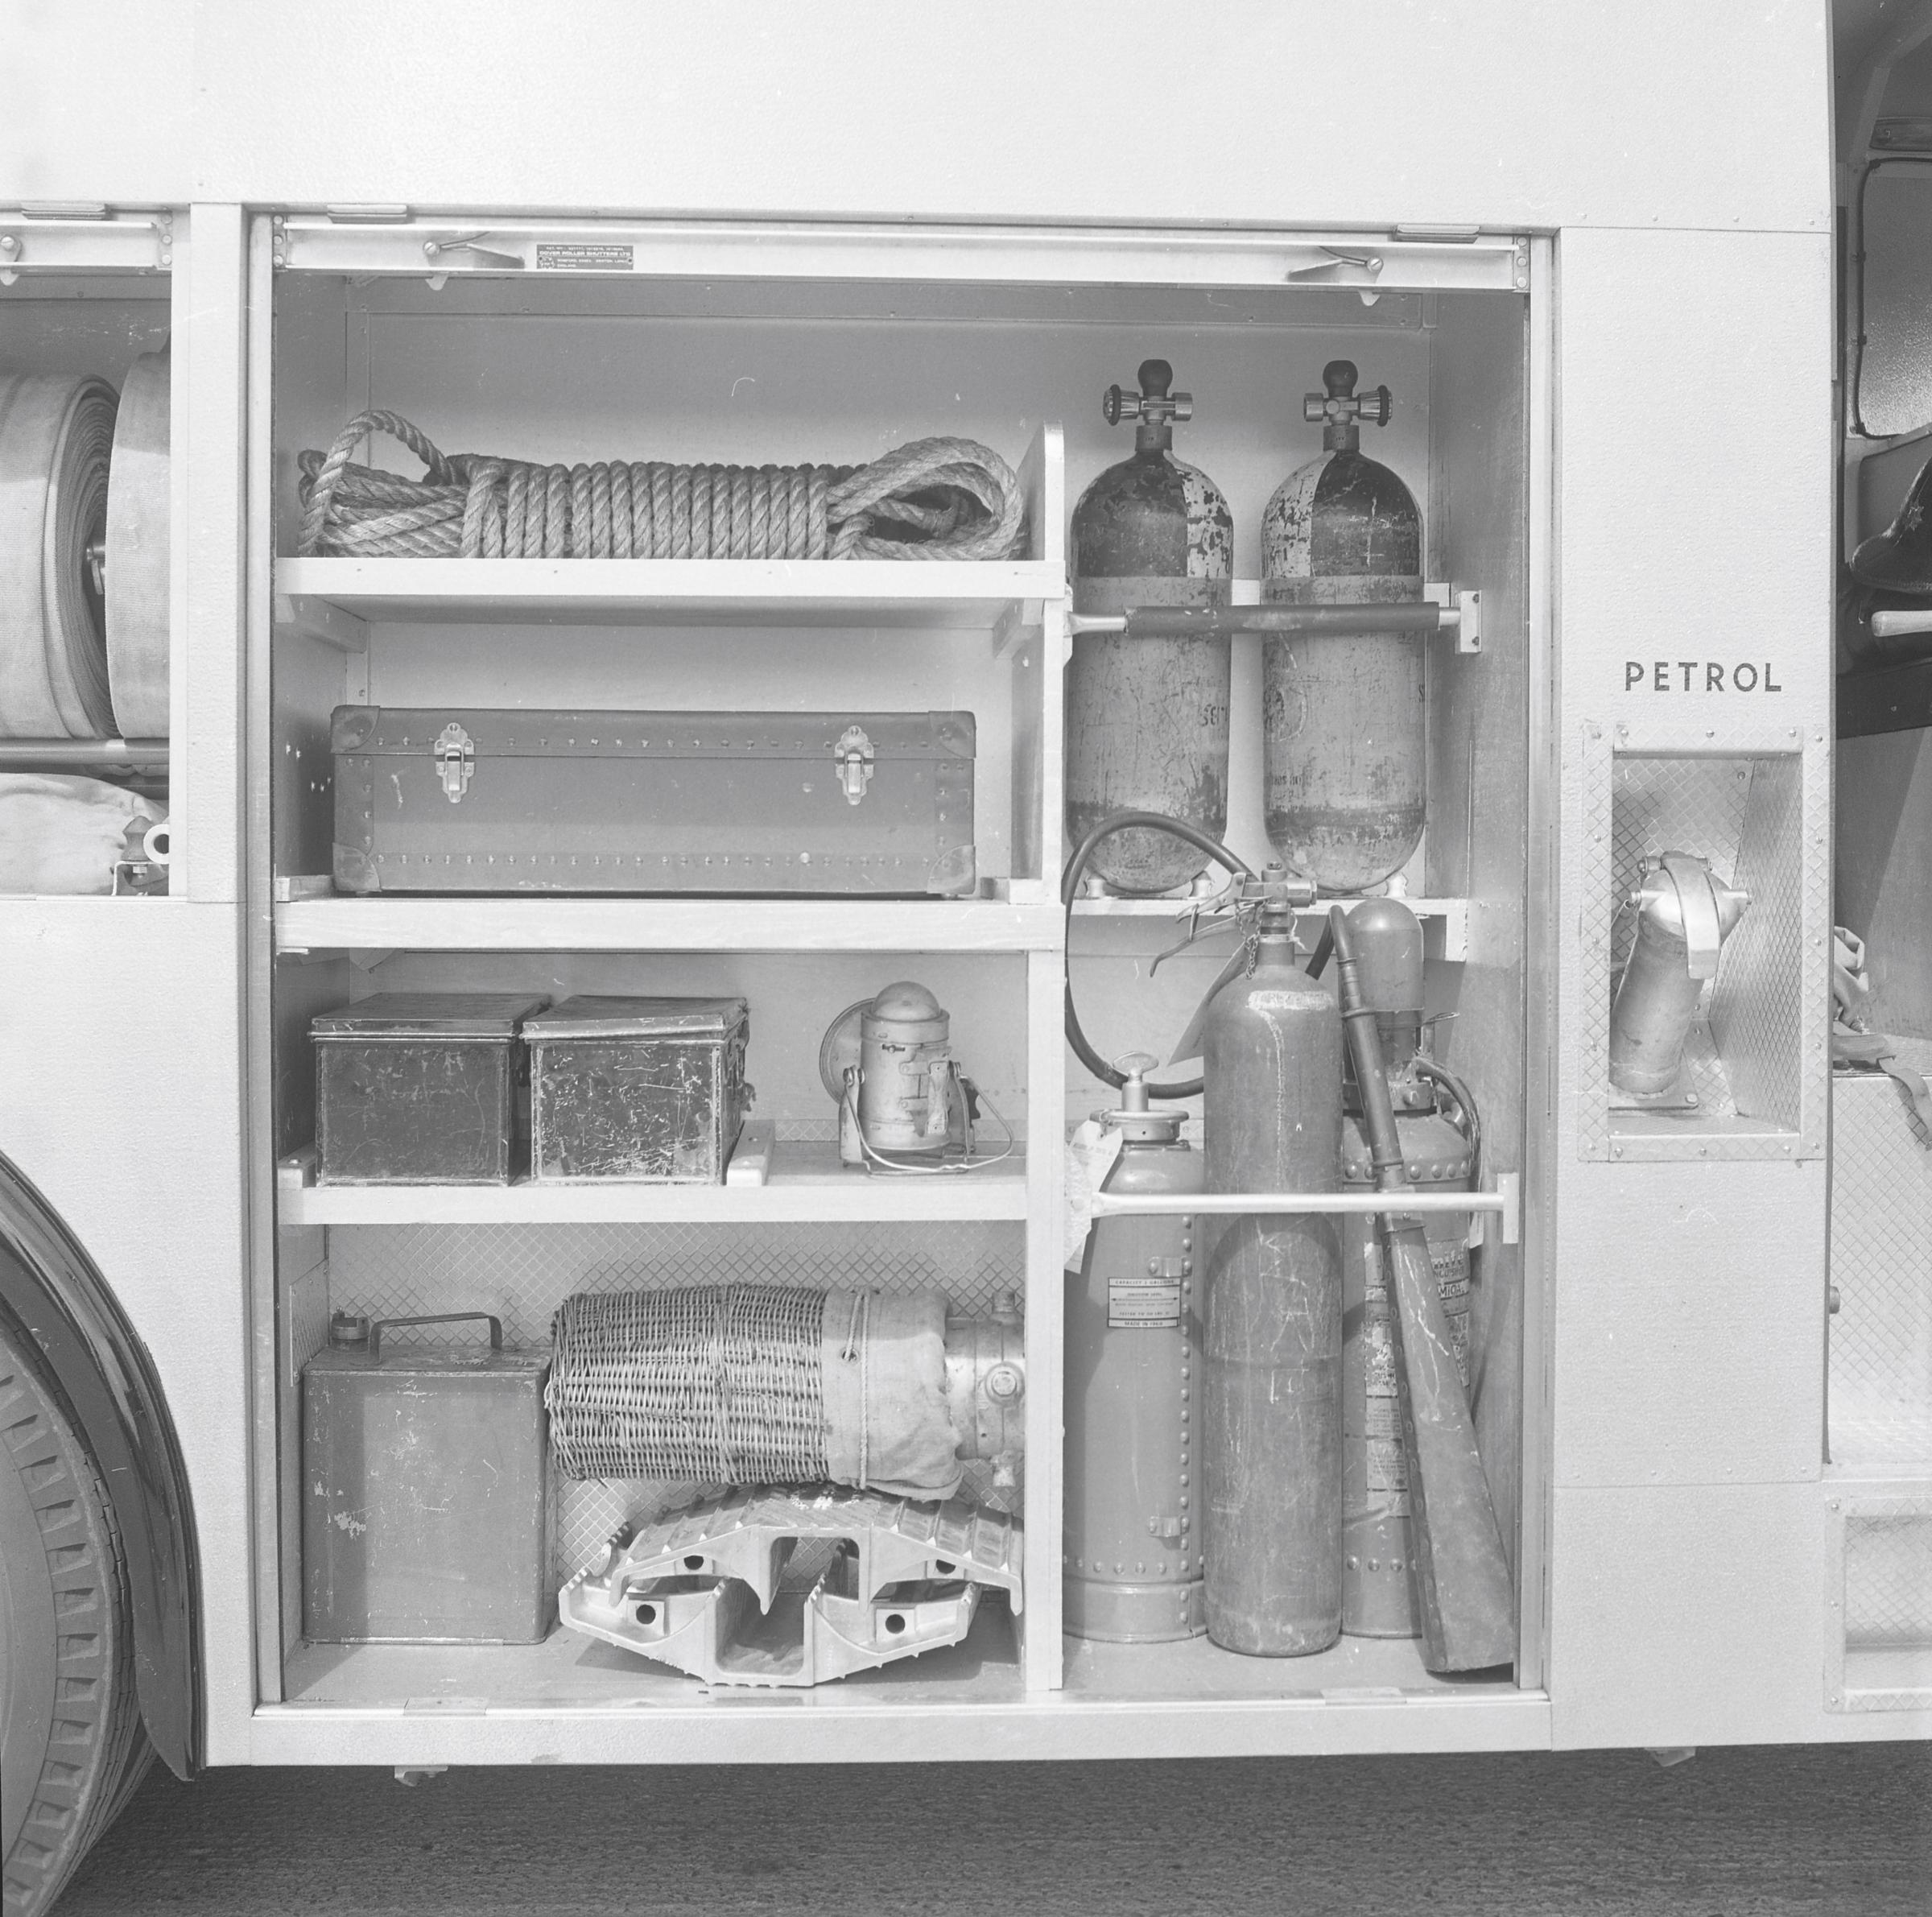 New Dennis fire engine at Wrexham Fire Station, 1969.